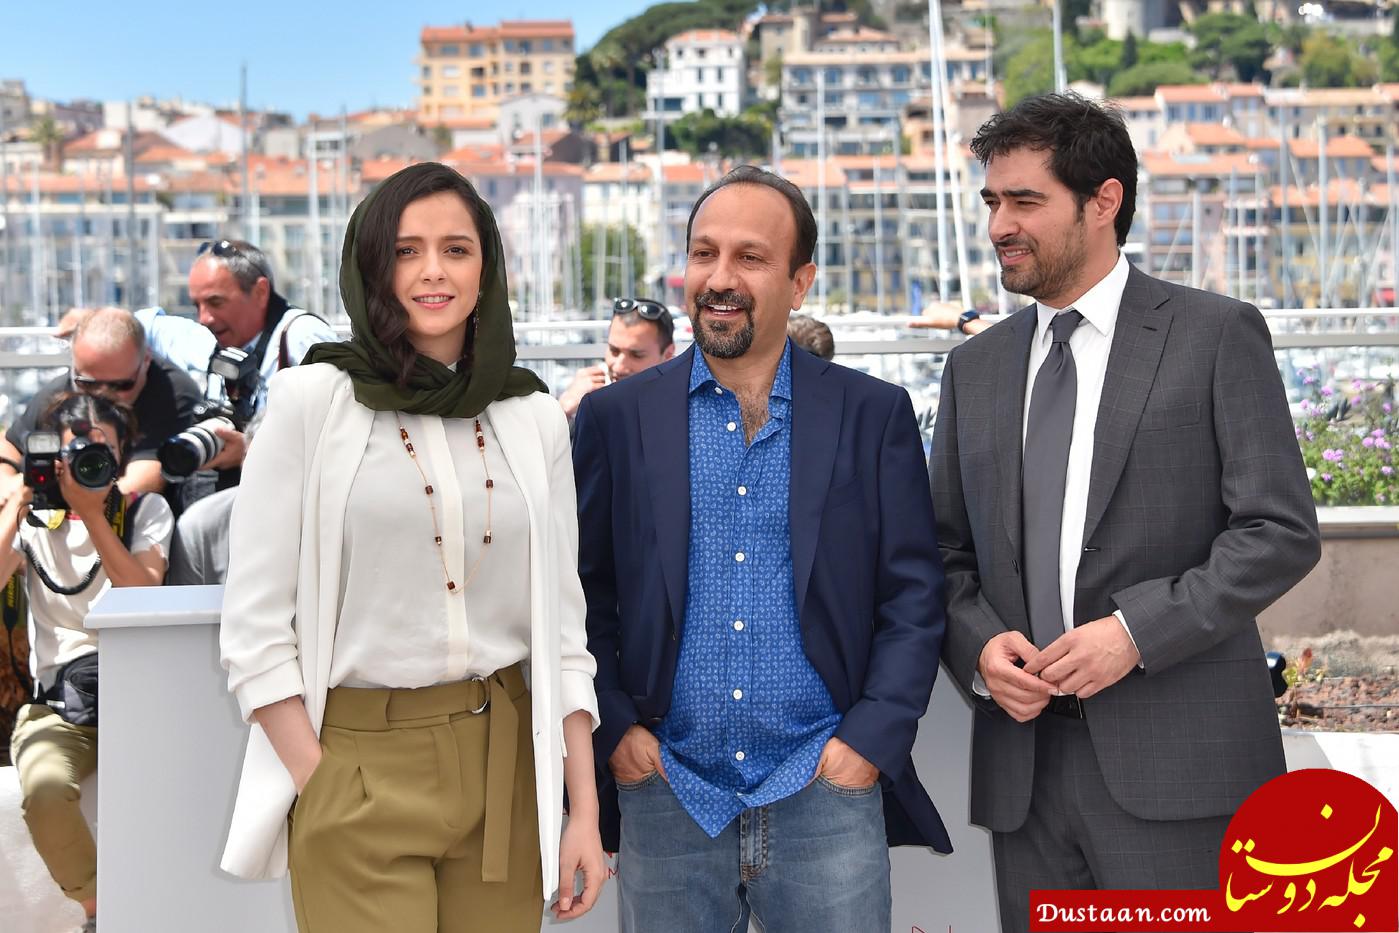 https://img.aws.la-croix.com/2016/05/21/1300761860/Le-cineaste-iranien-Asghar-Farhadi-C-pause-avec-acteurs-film-Le-Client-Taraneh-Alidoosti-G-Shahab-Hosseini-D-Festival-Cannes-21-2016_0_1400_933.jpg